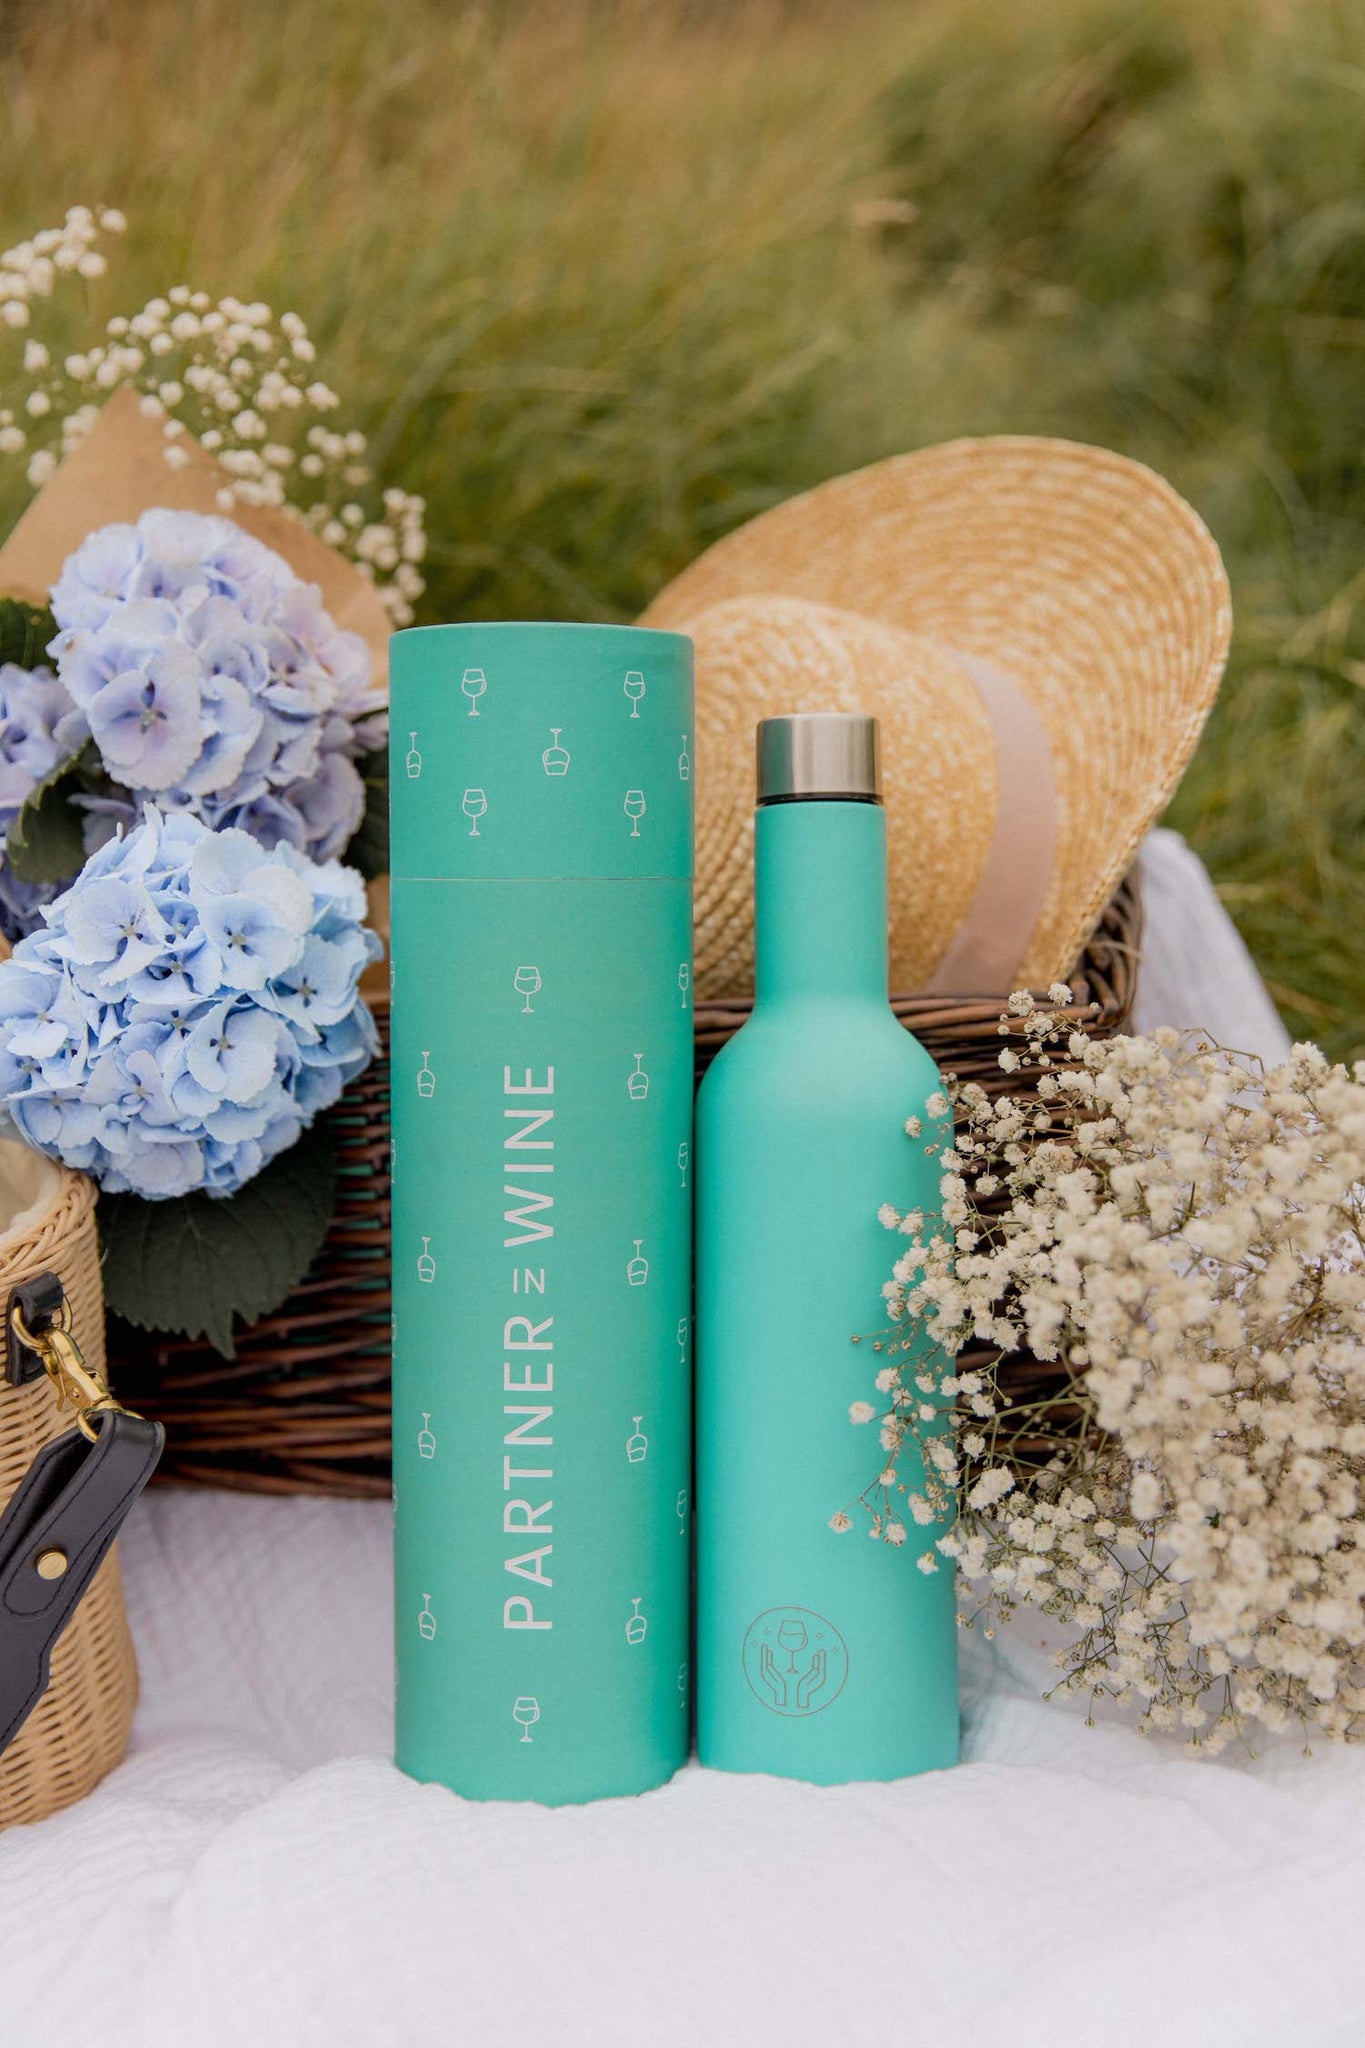 The Partner in Wine Bottle - Turquoise